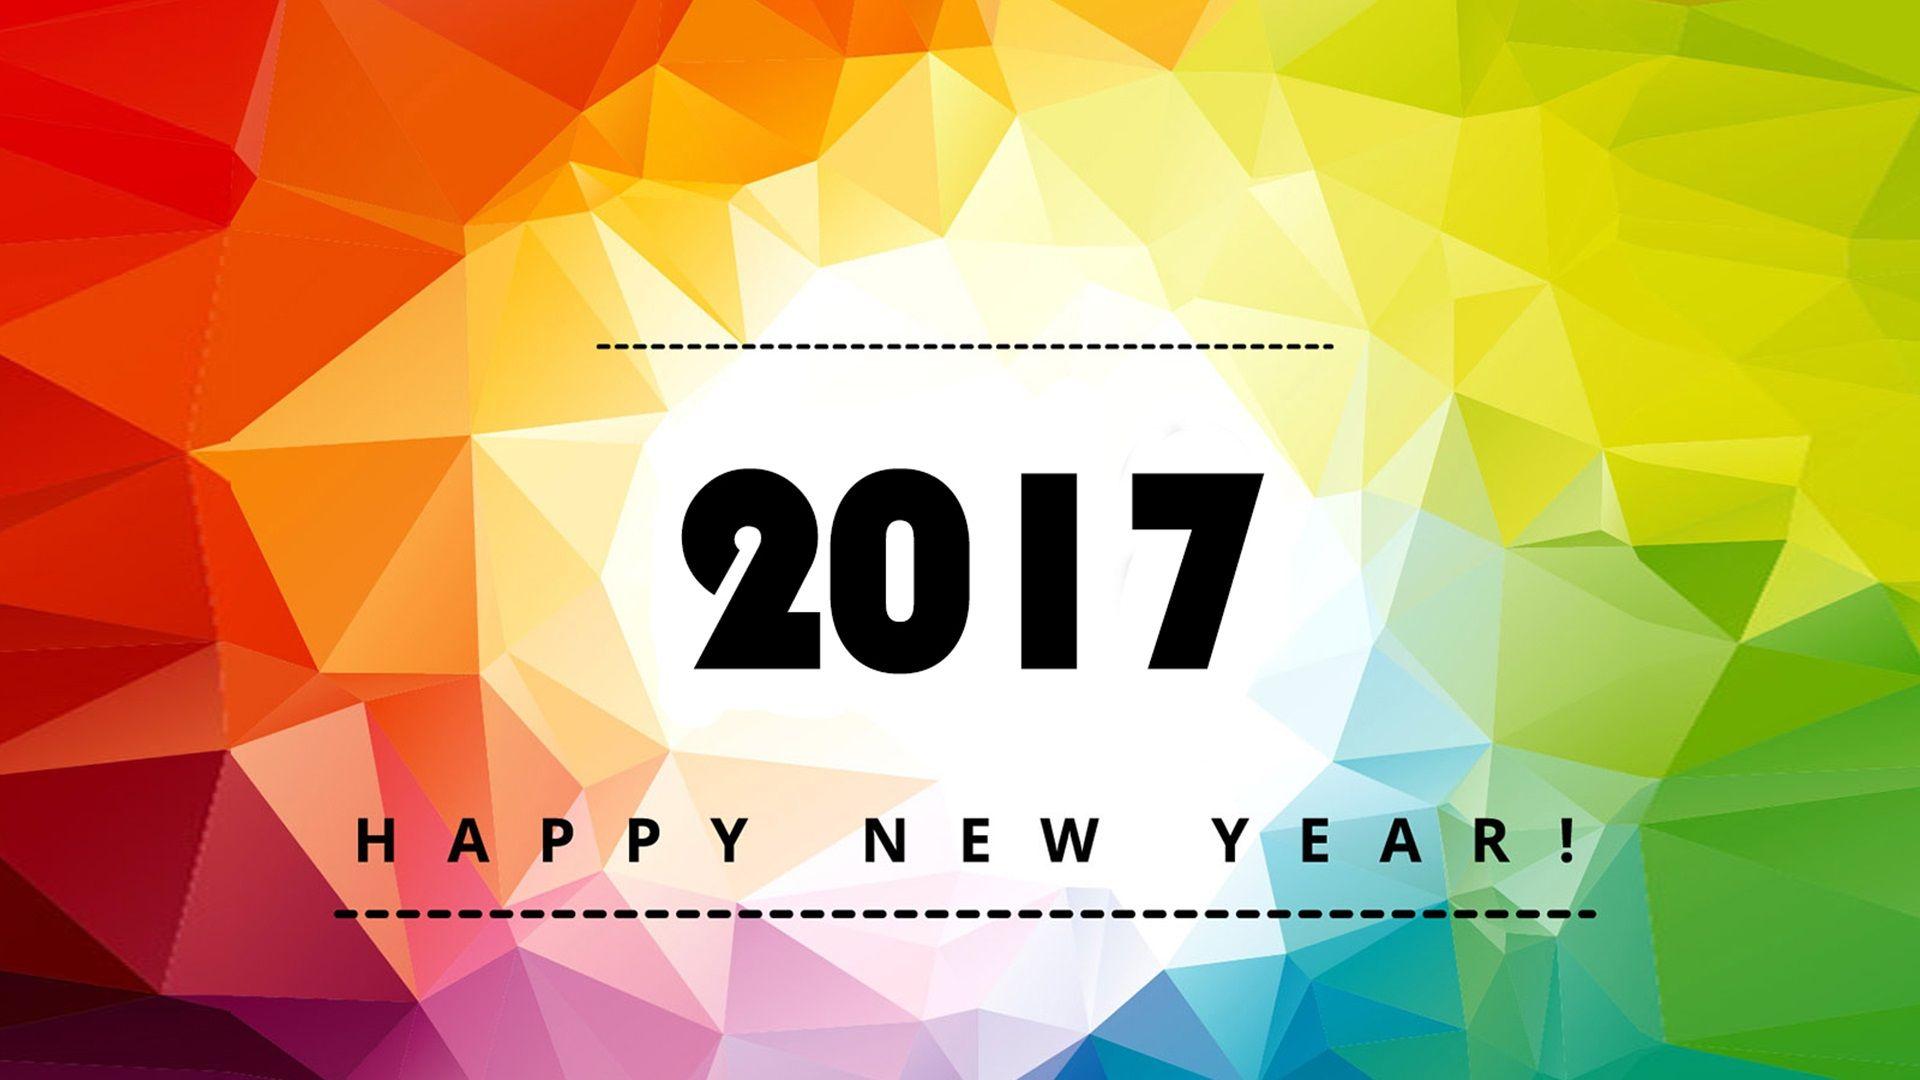 Wallpaper happy new year 2017 1920×1080